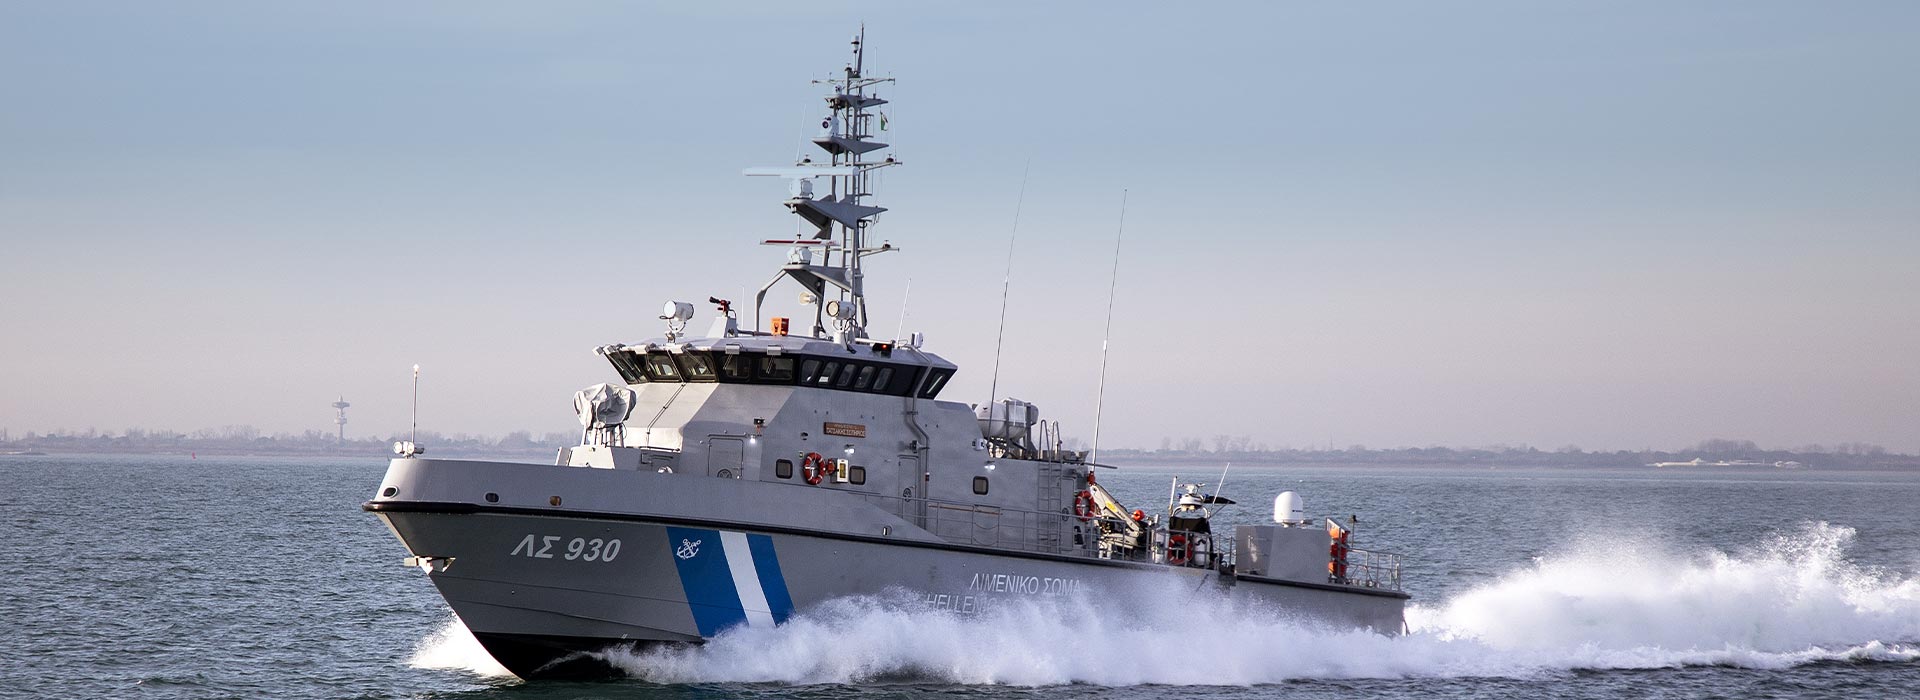 FPV355, Fast Patrol Vessel, Cantiere Navale Vittoria